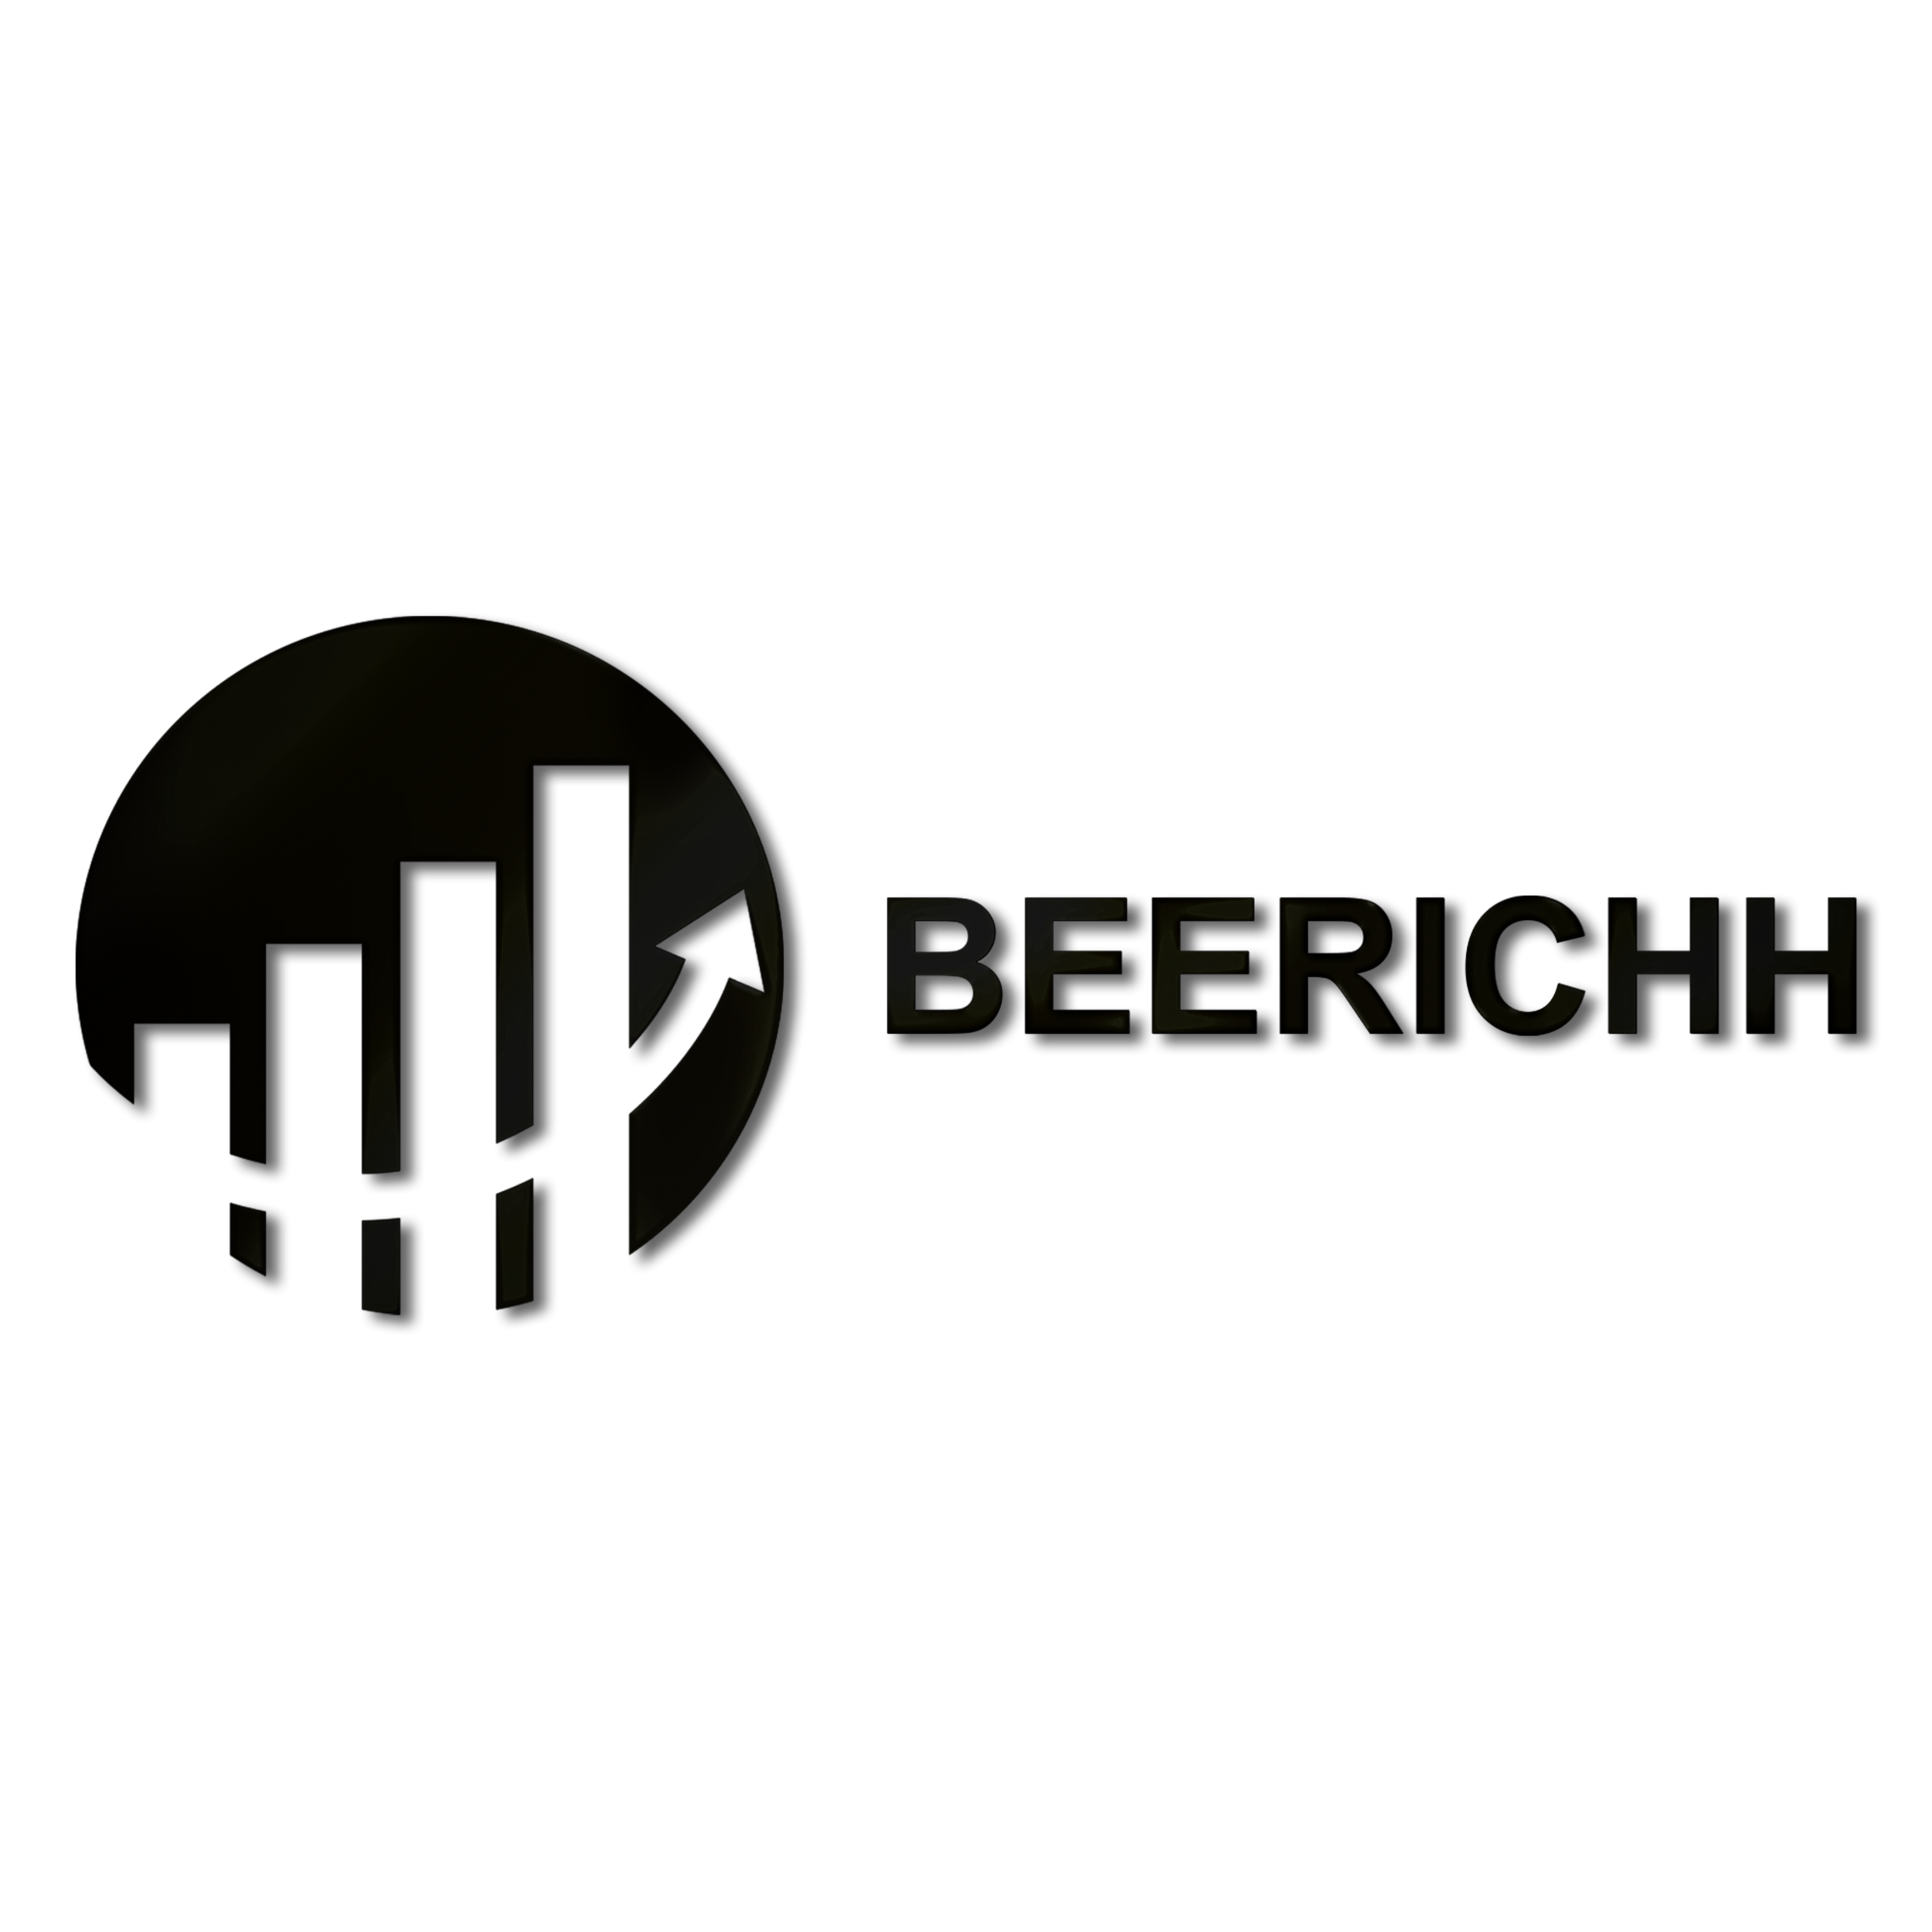 Beerichh